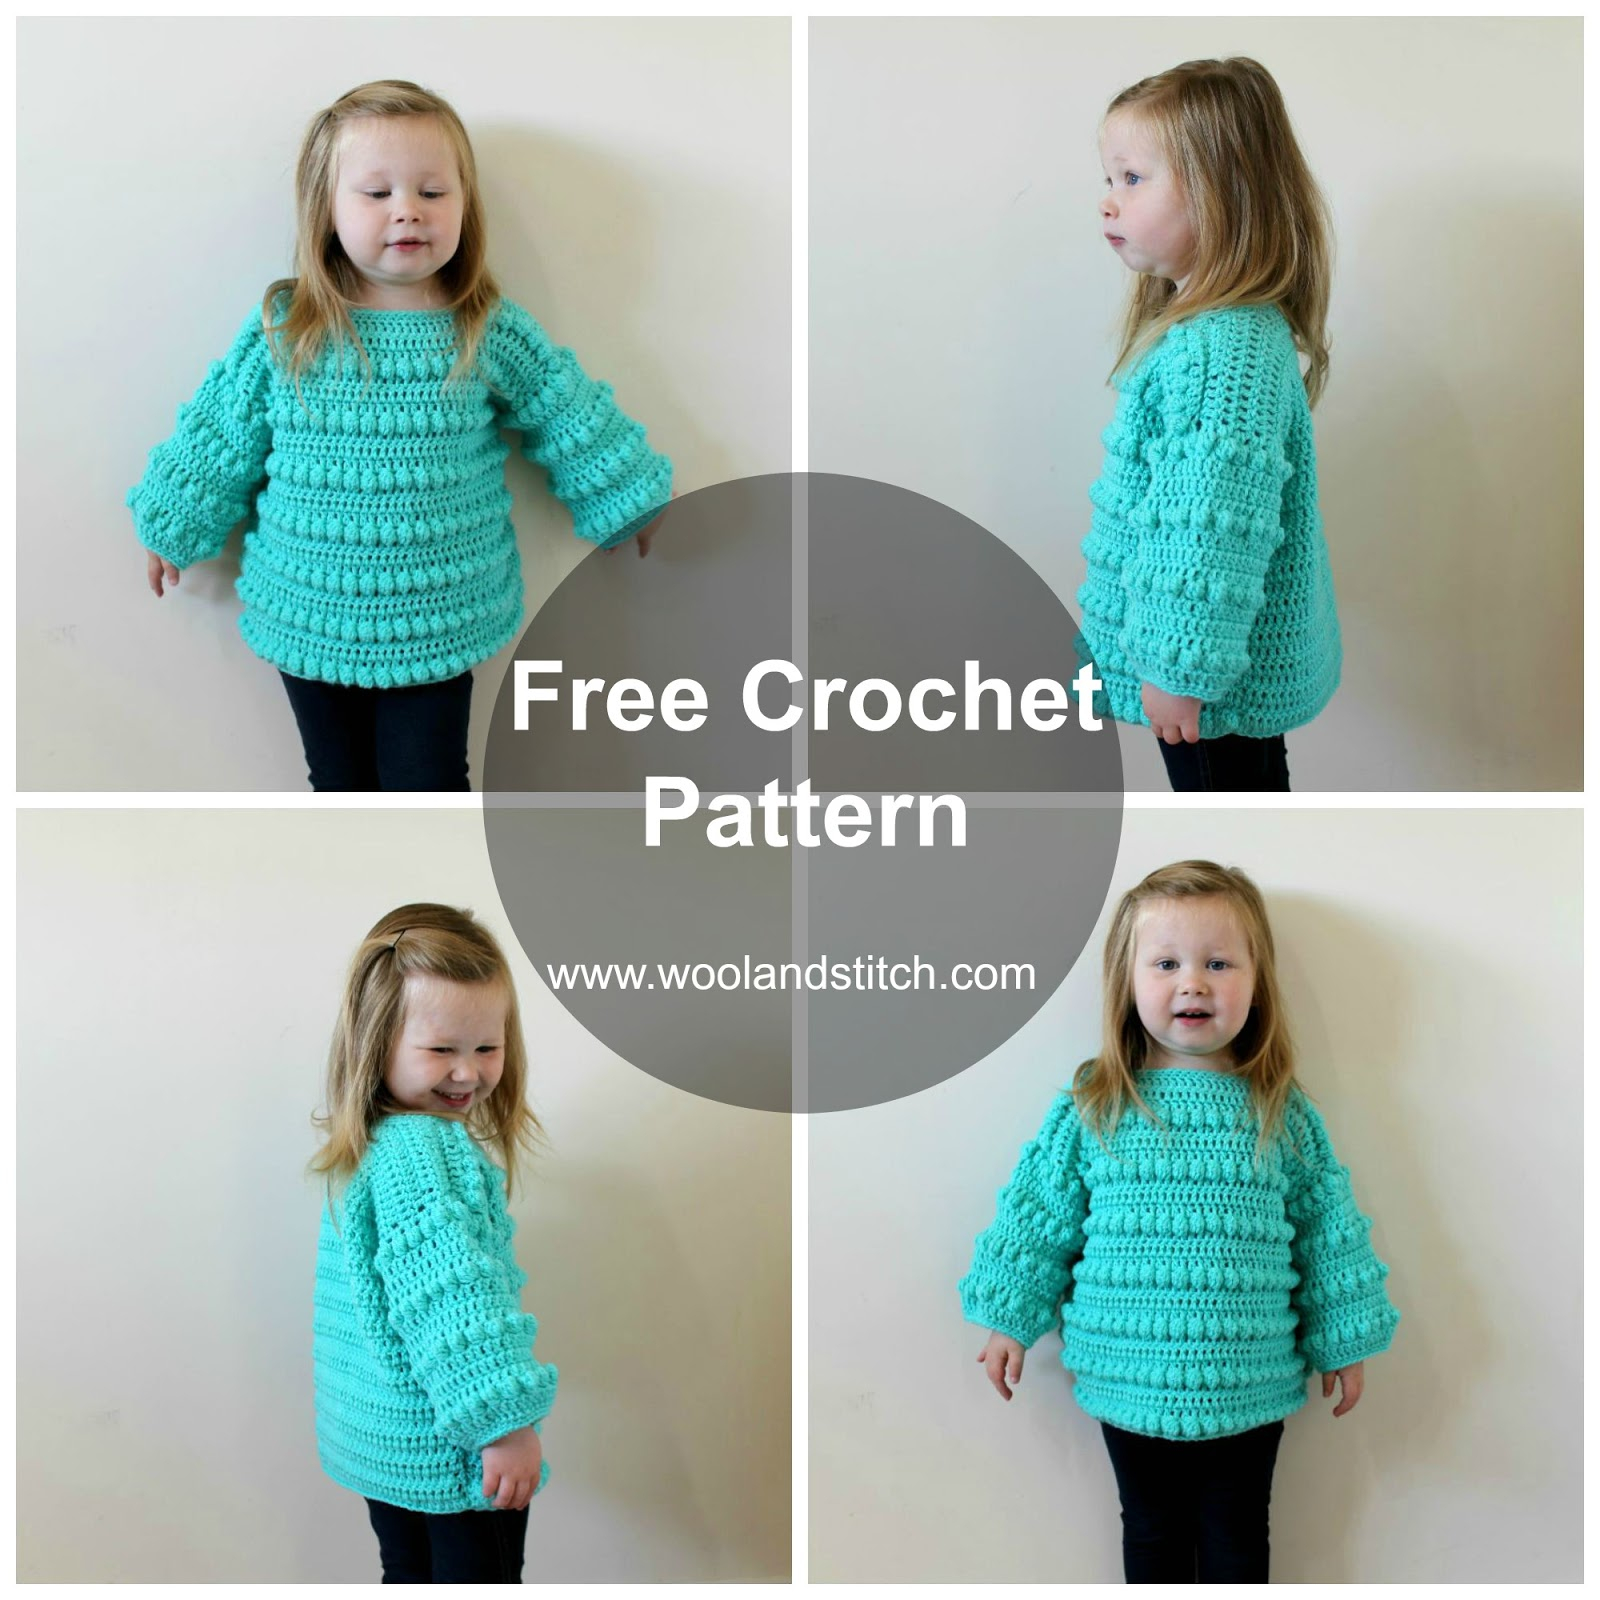 Free Crochet Sweater Patterns For Girls Mini Kids Bobble Sweater Free Crochet Pattern Wool And Stitch